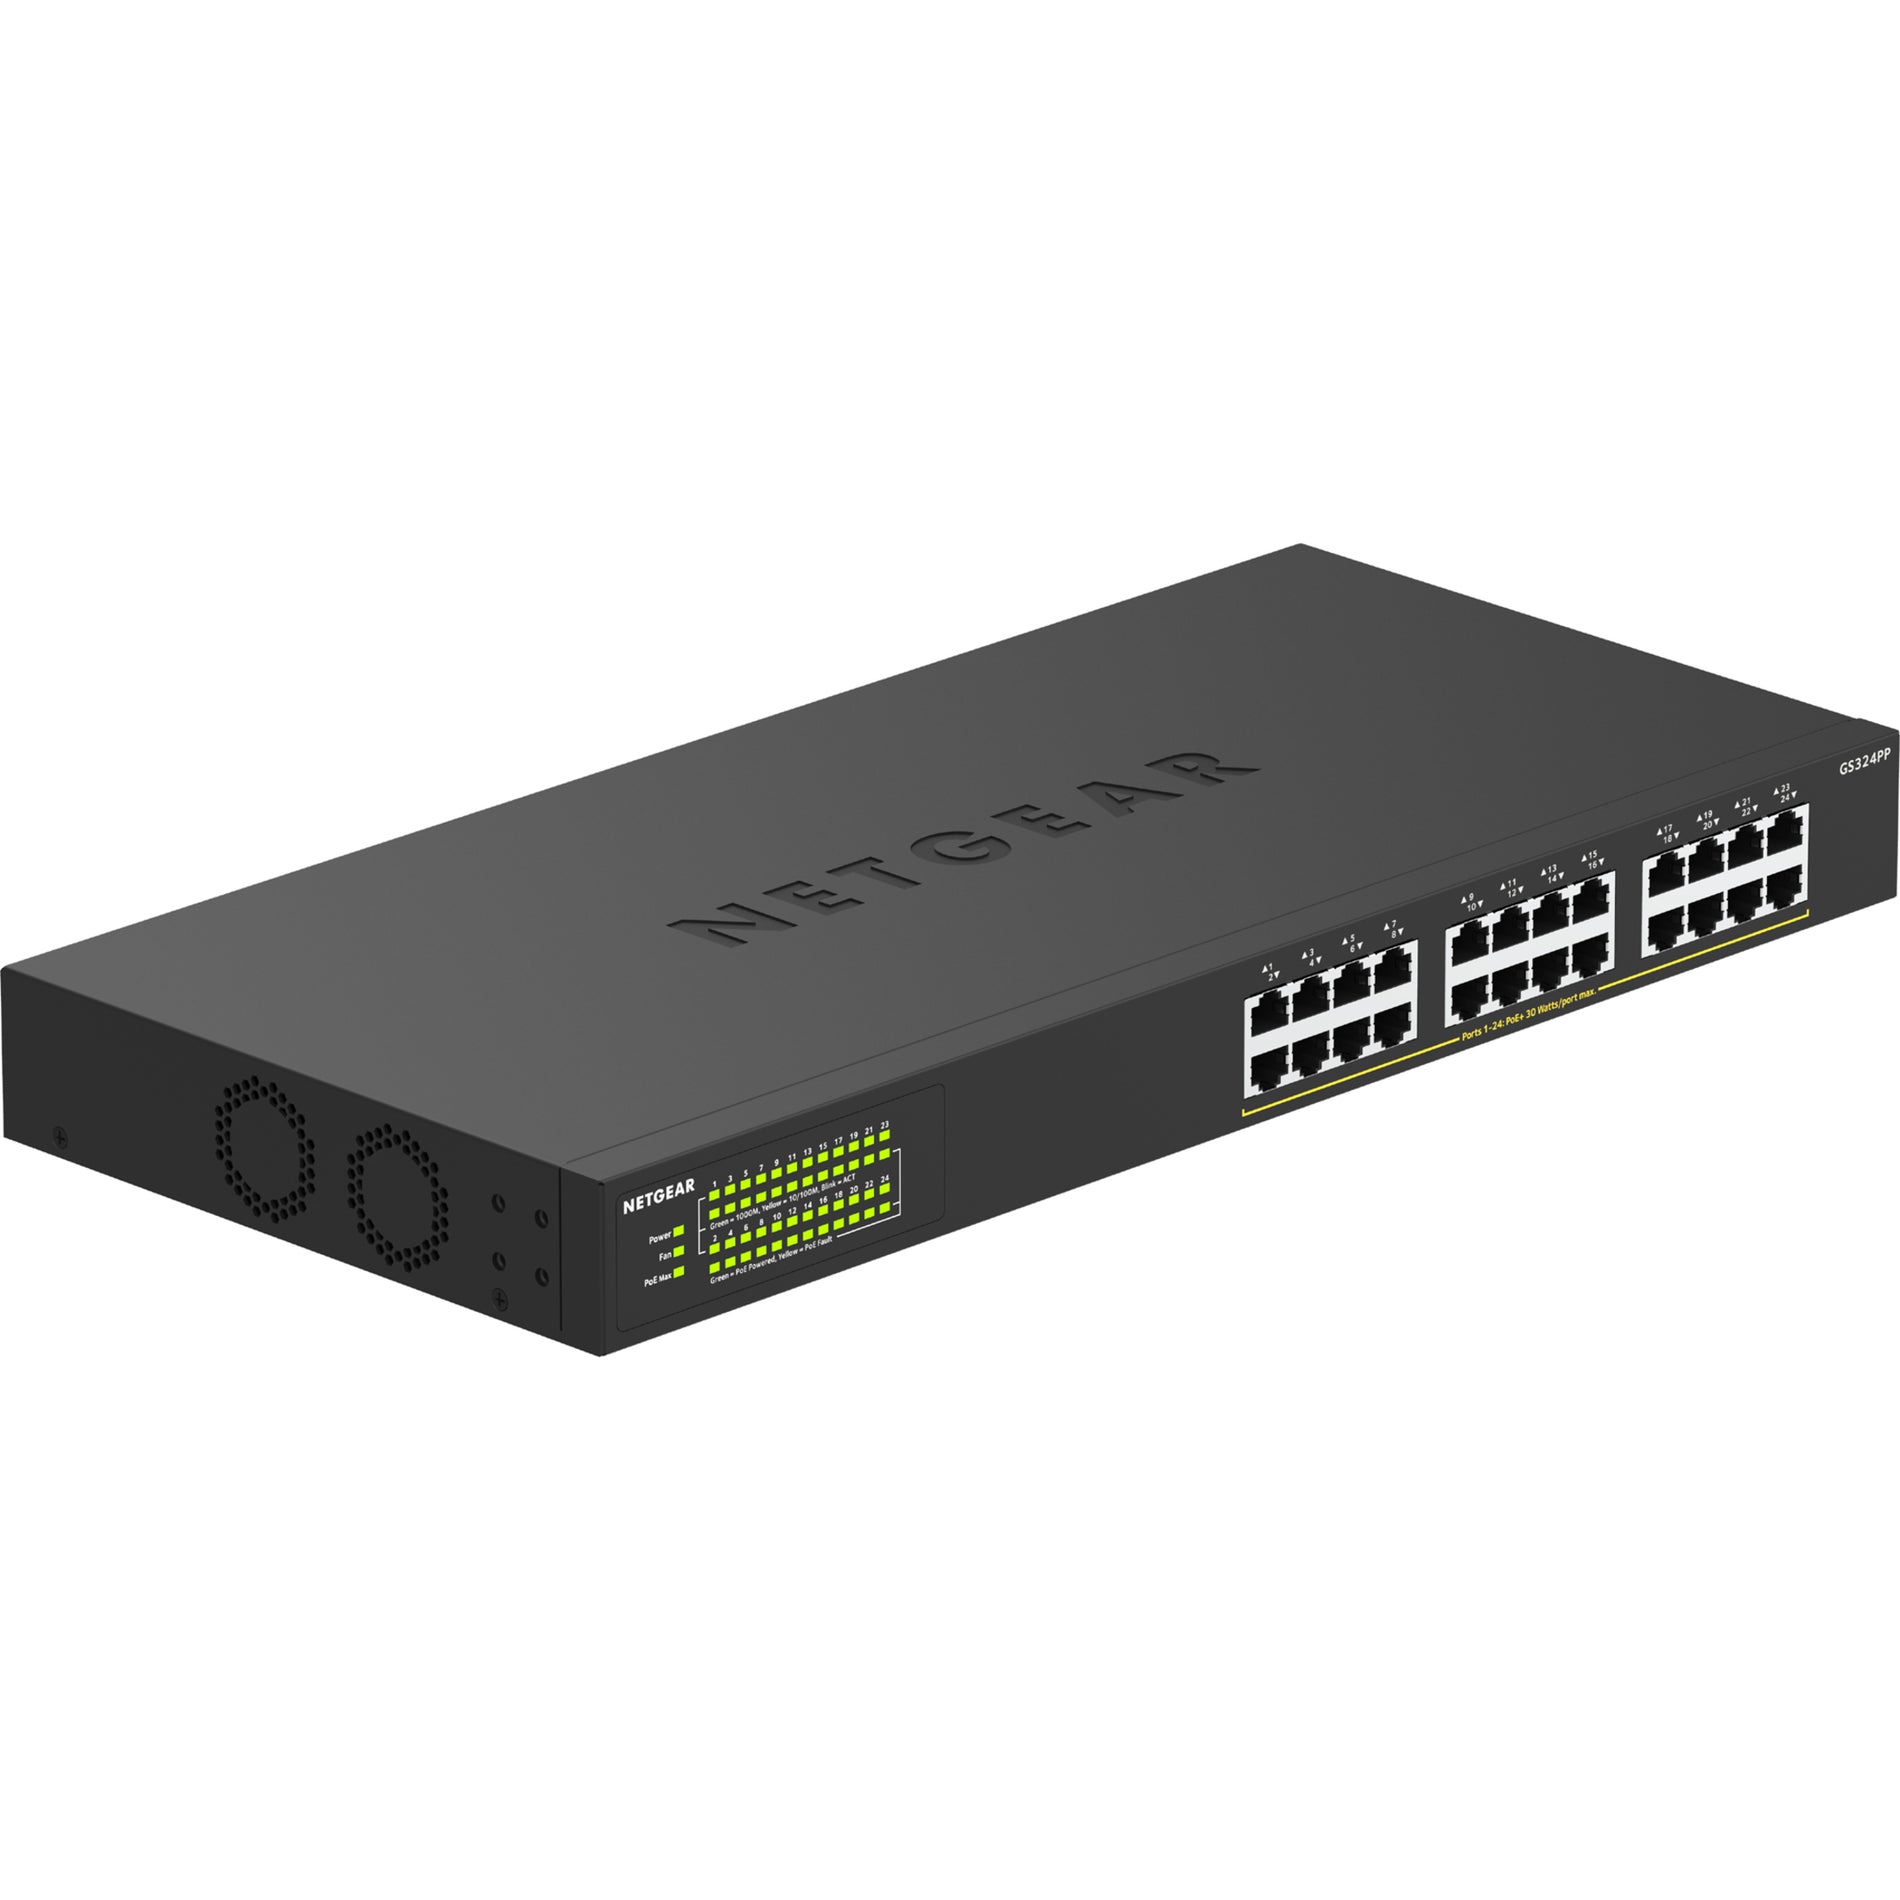 Netgear GS324PP-100NAS GS324PP Ethernet Switch, 24 Port Gigabit Ethernet Network, 3 Year Warranty, RoHS, REACH, WEEE, ErP Certified [Discontinued]